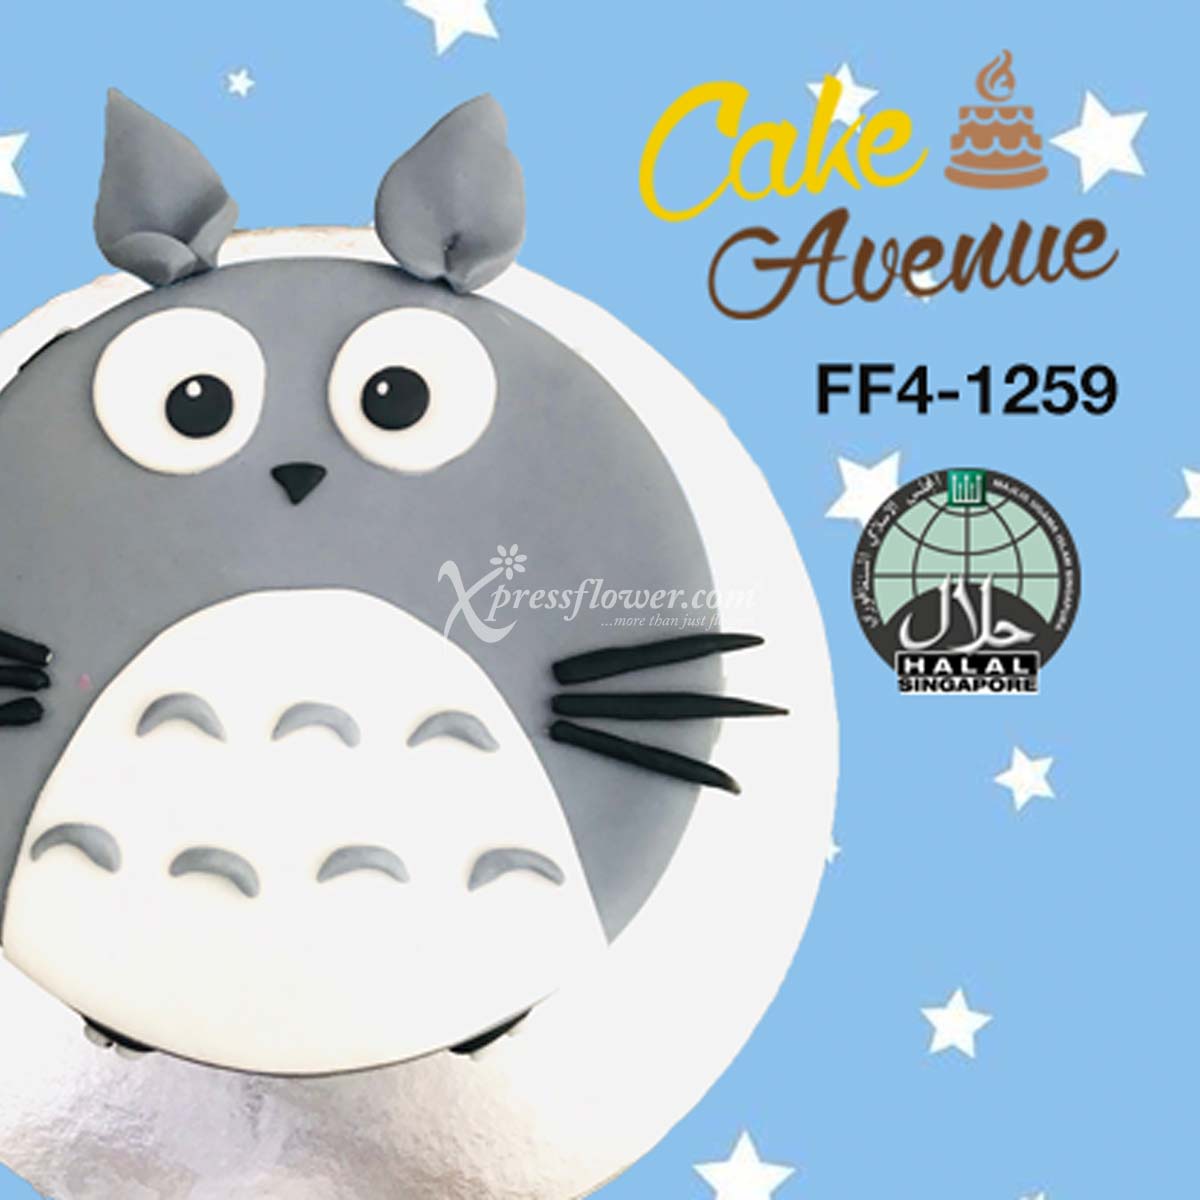 Totoro (Cake Avenue)